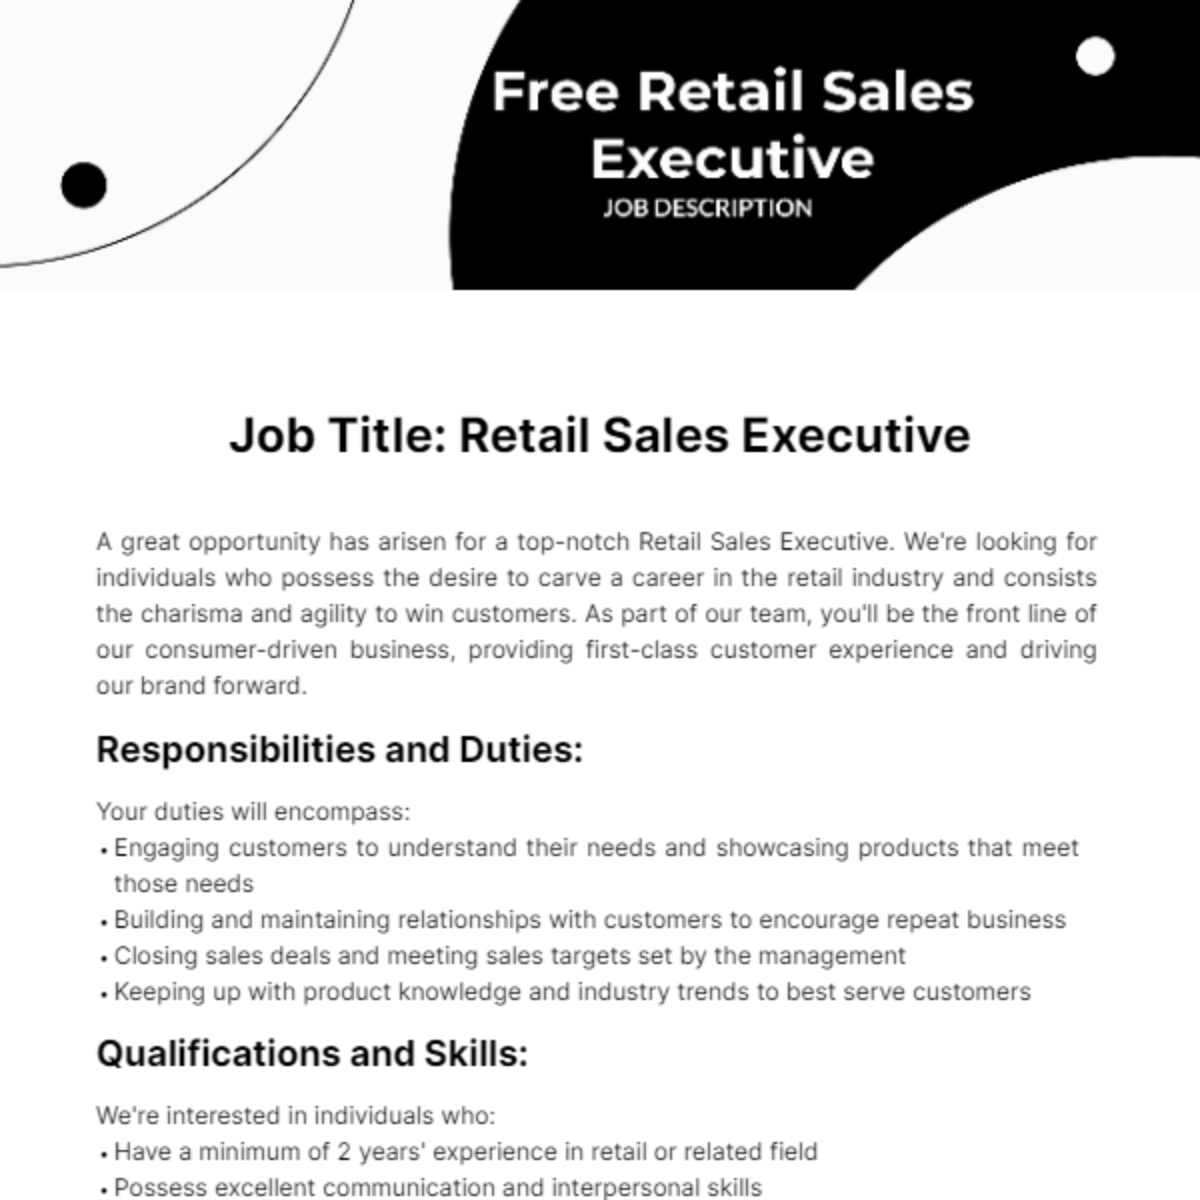 Free Retail Sales Executive Job Description Template